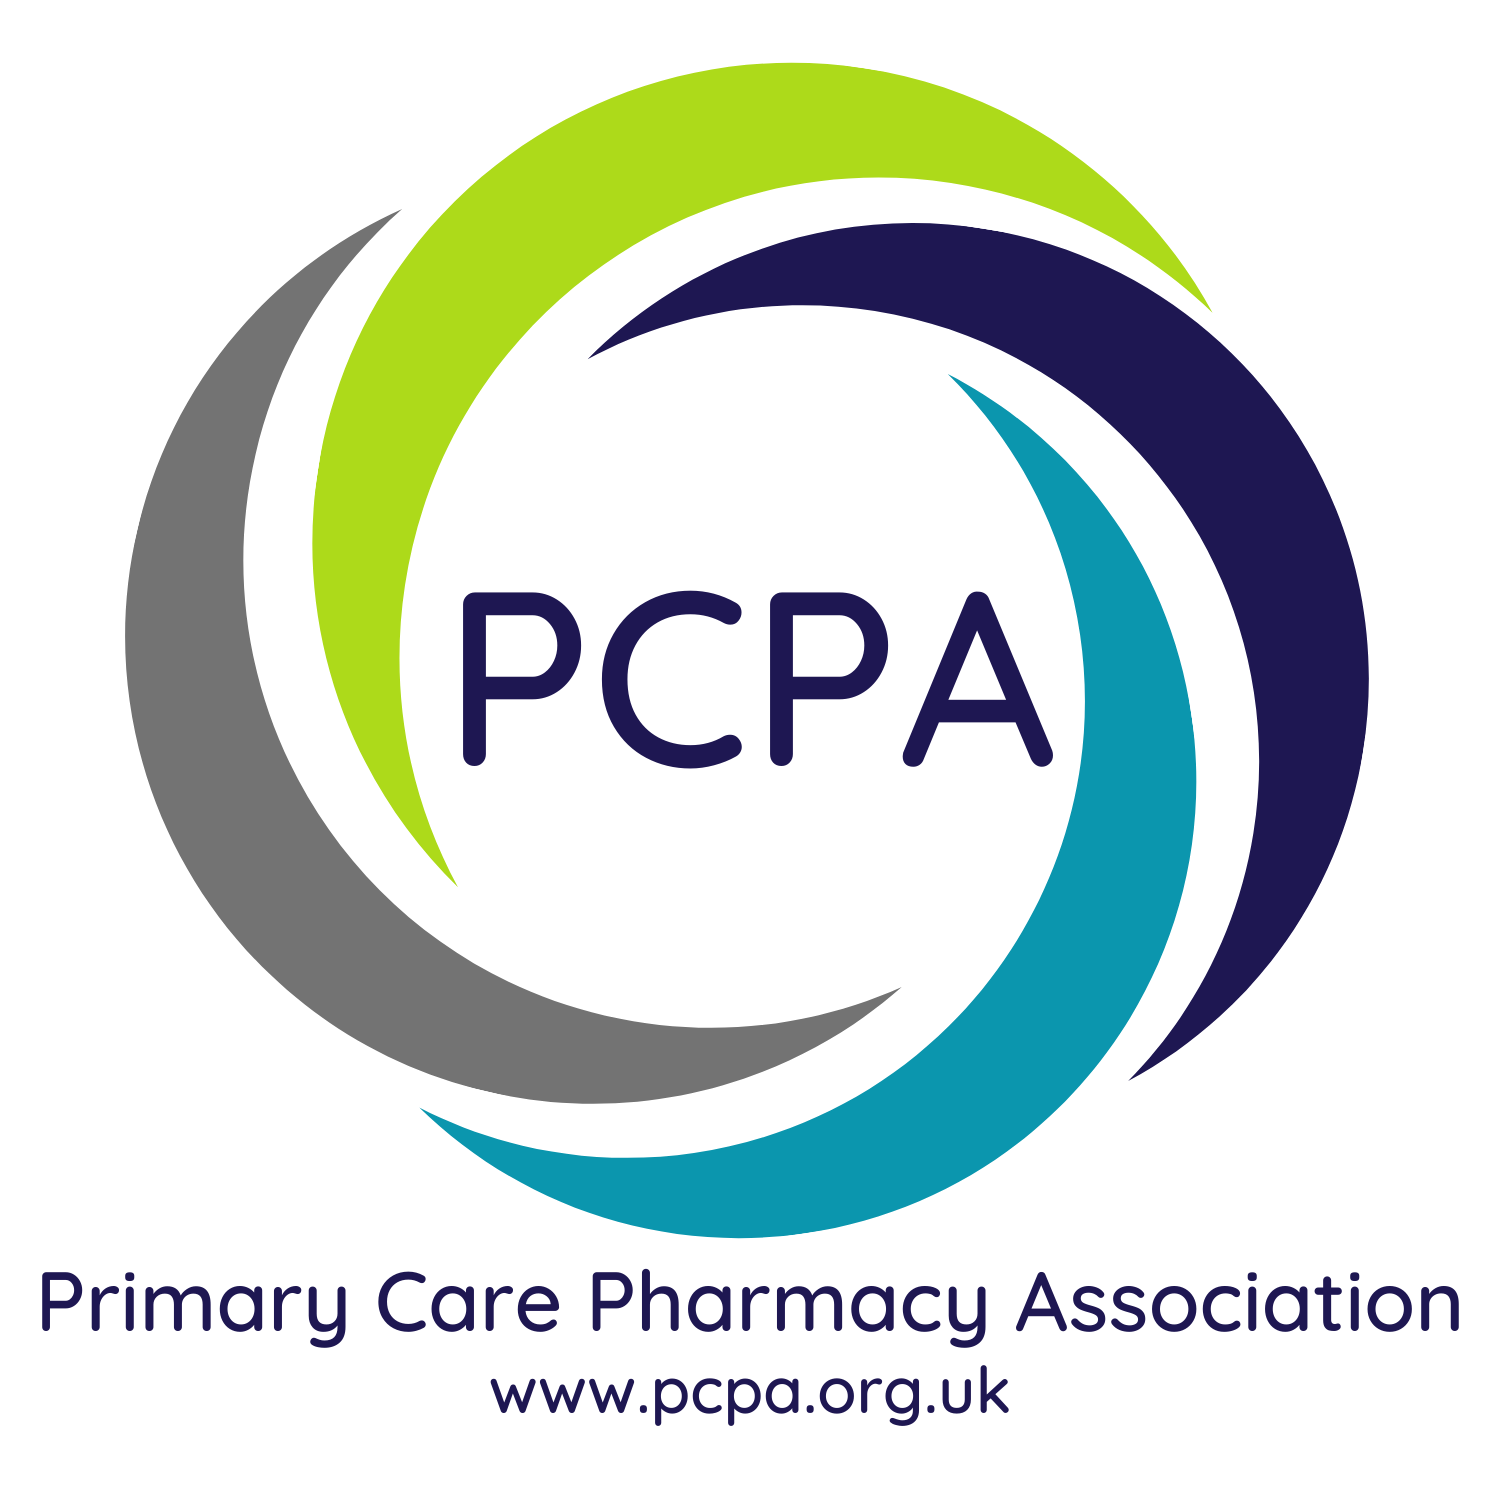 Primary Care Pharmacy Association - PCPA